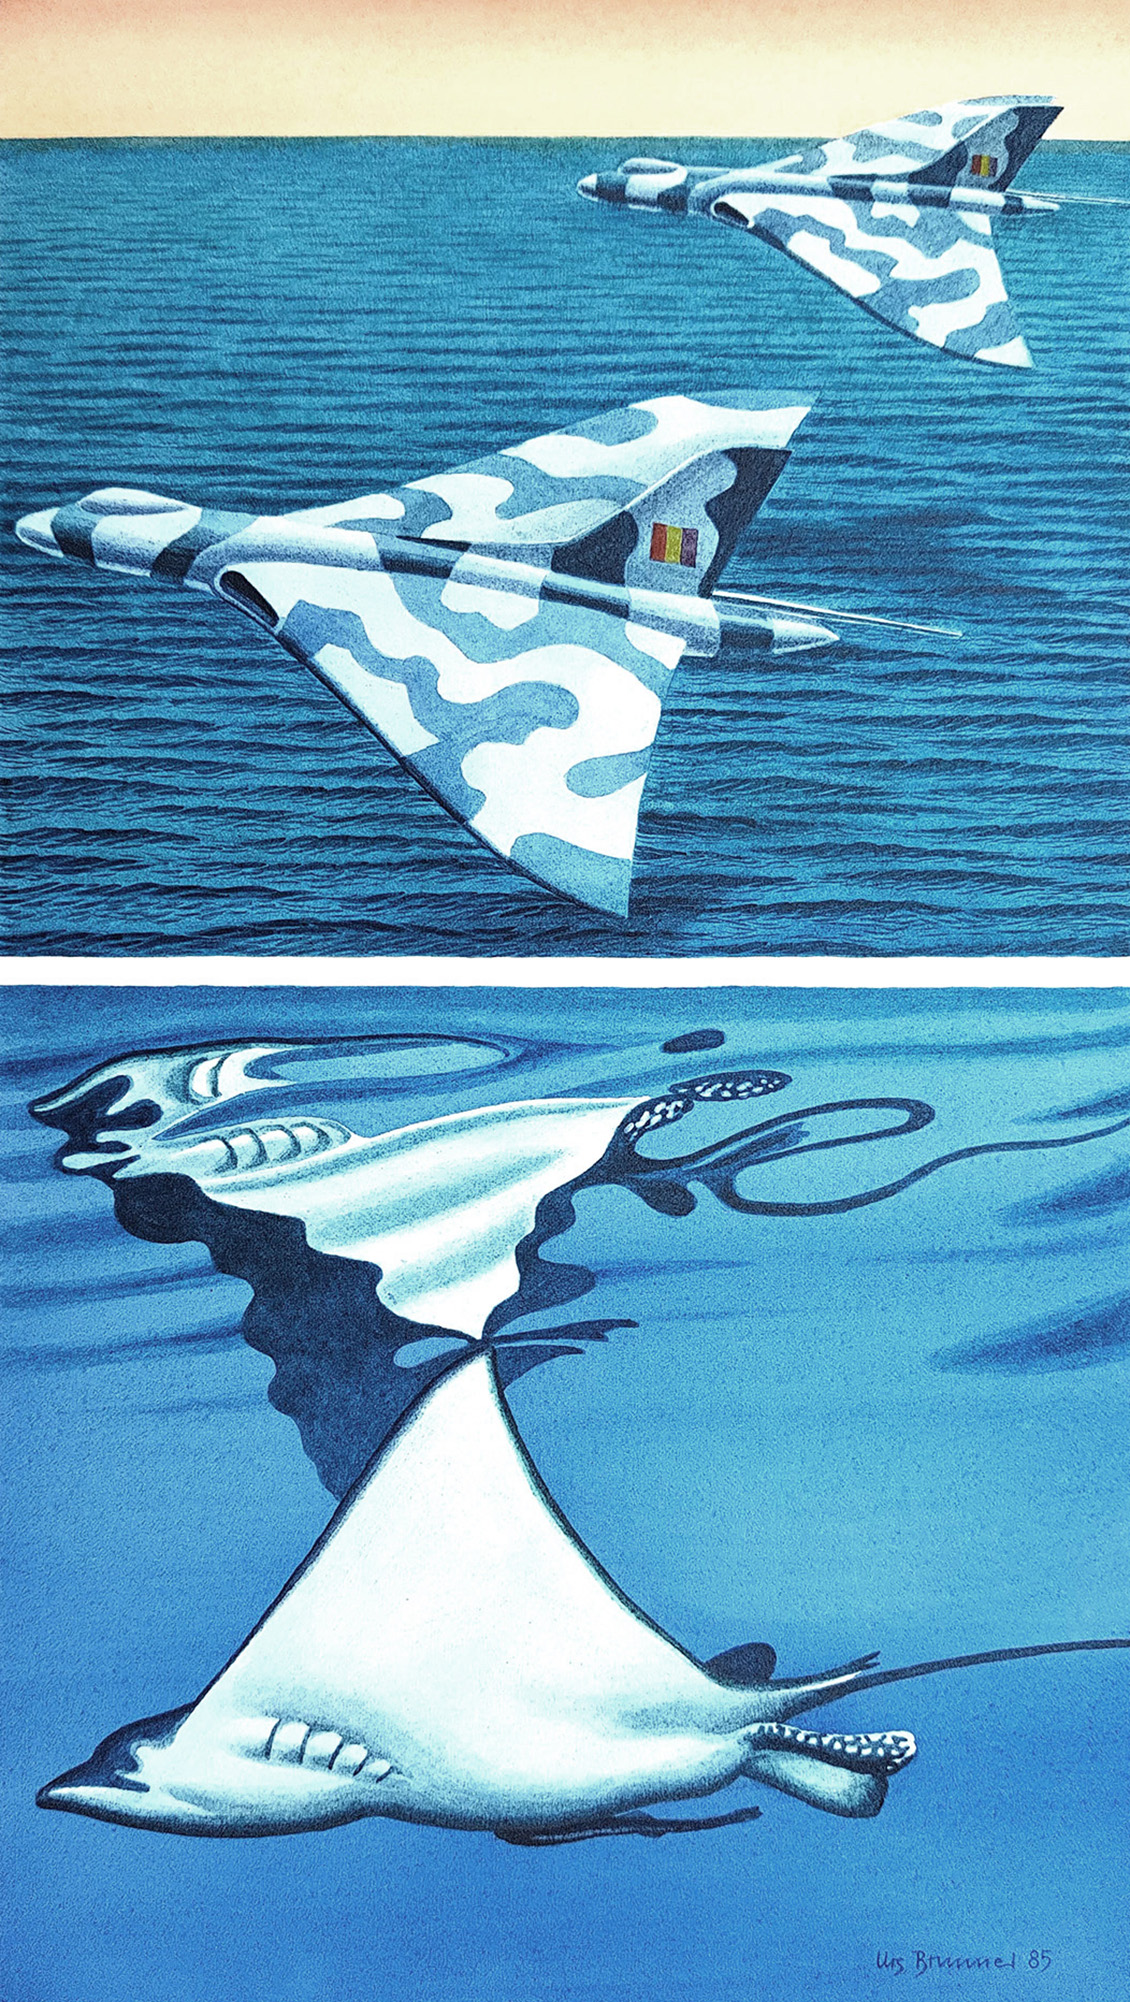 Analogie VII, 1985, Aquarell auf Papier, 35 x 20 cm